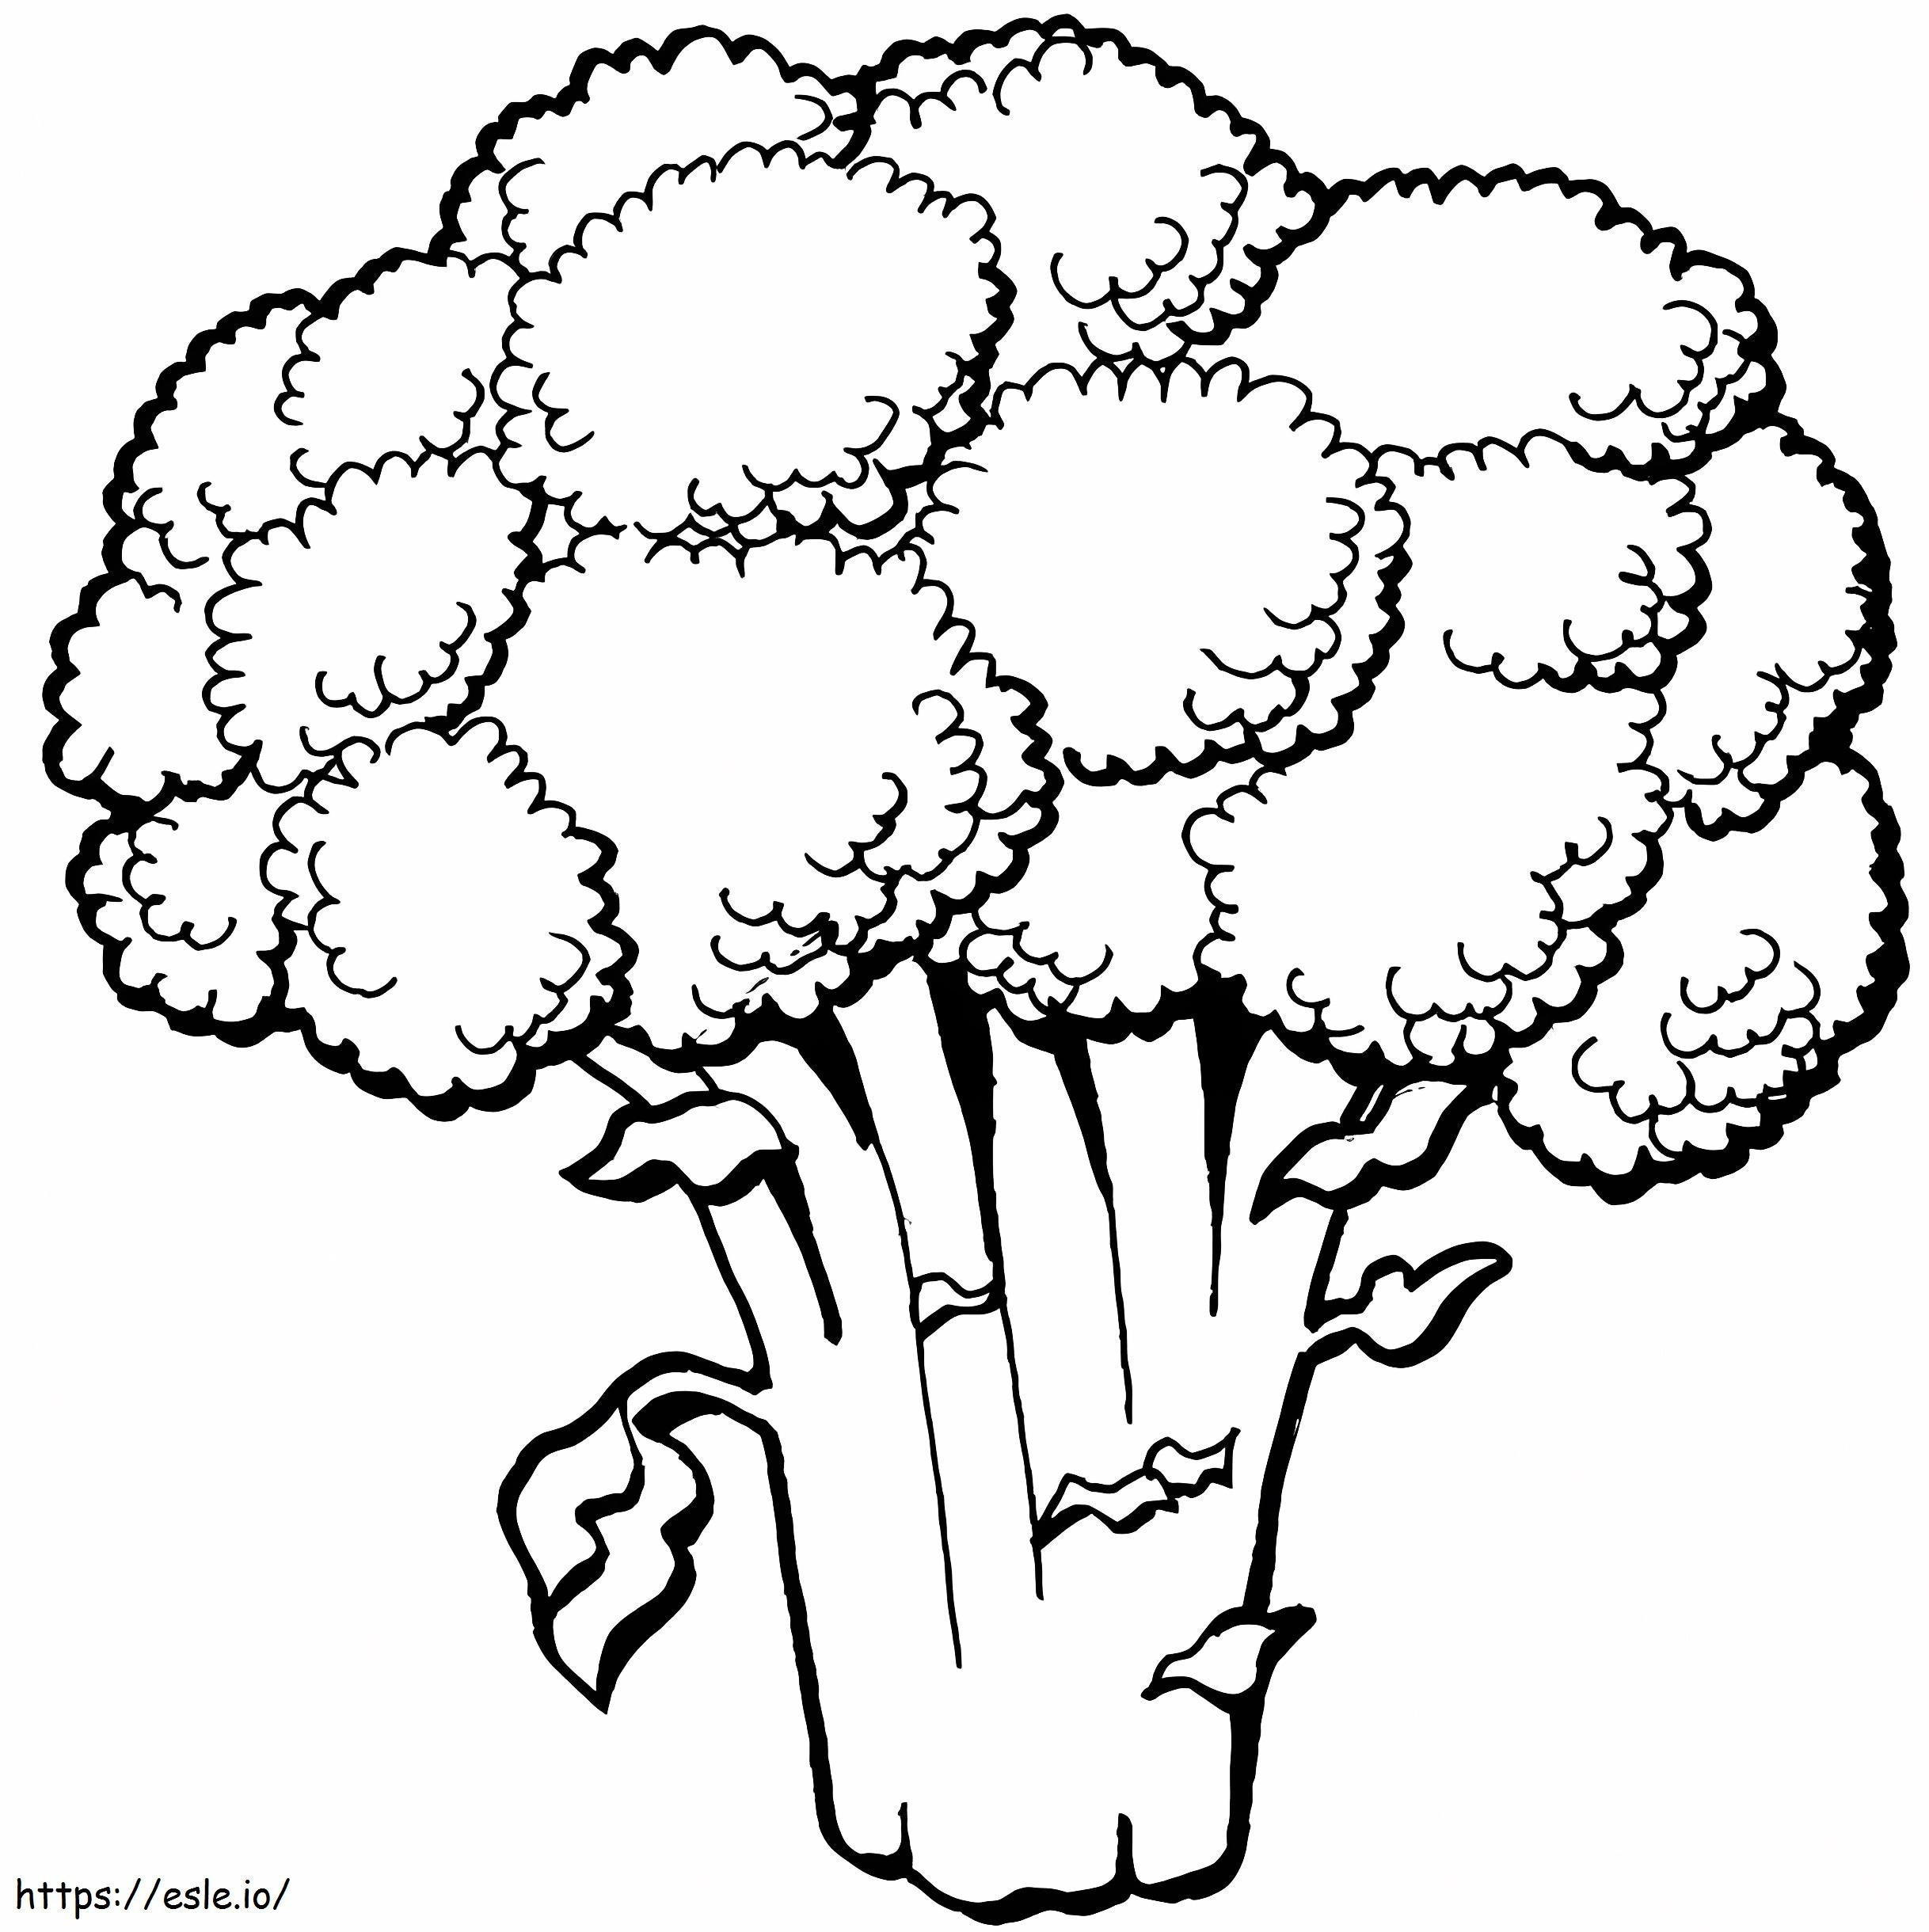 A Broccoli coloring page